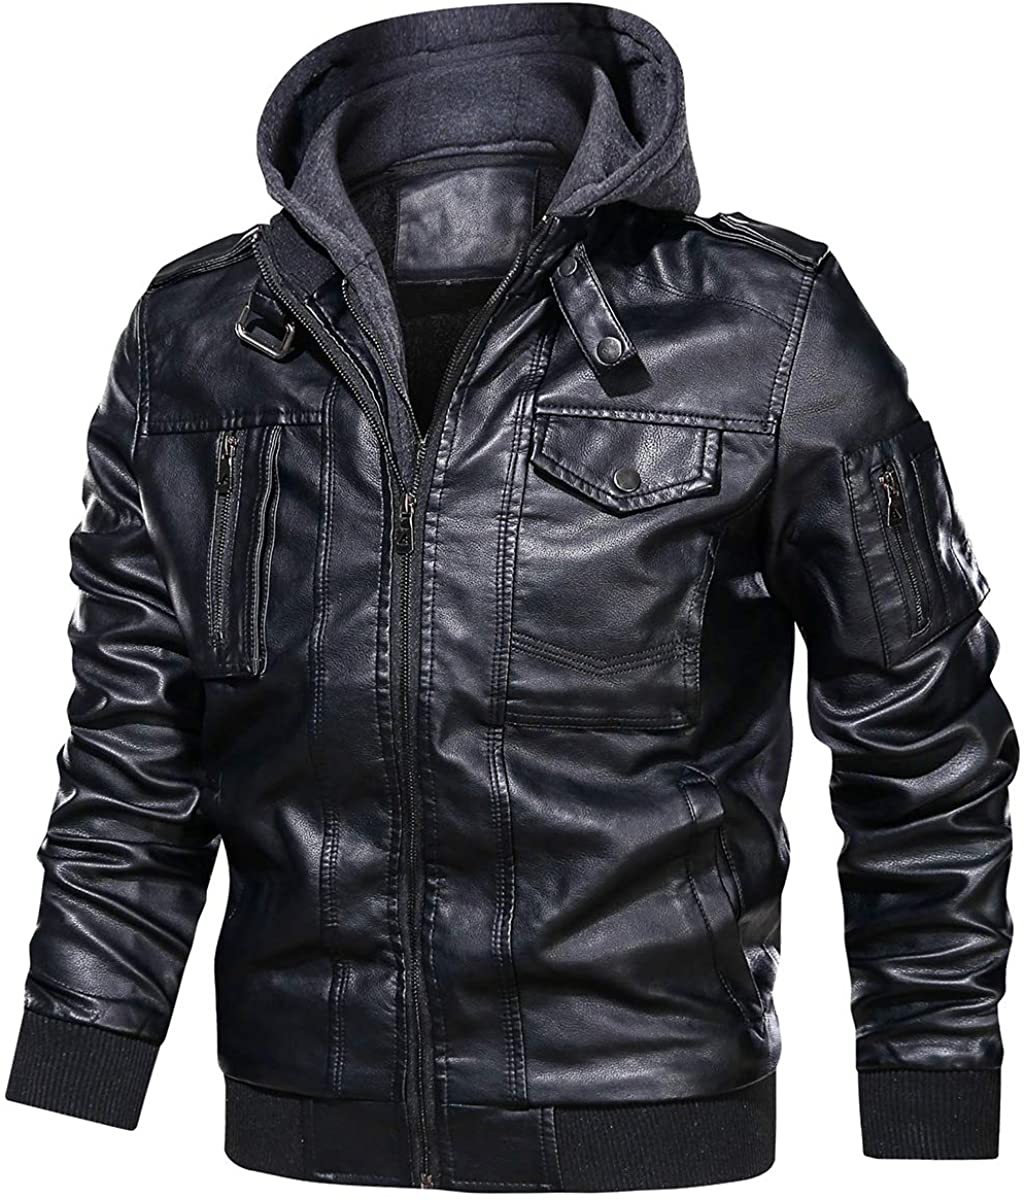 NZSH Mens Leather jacket Genuine Hight Quality Lambskin Biker Coat Slim fit